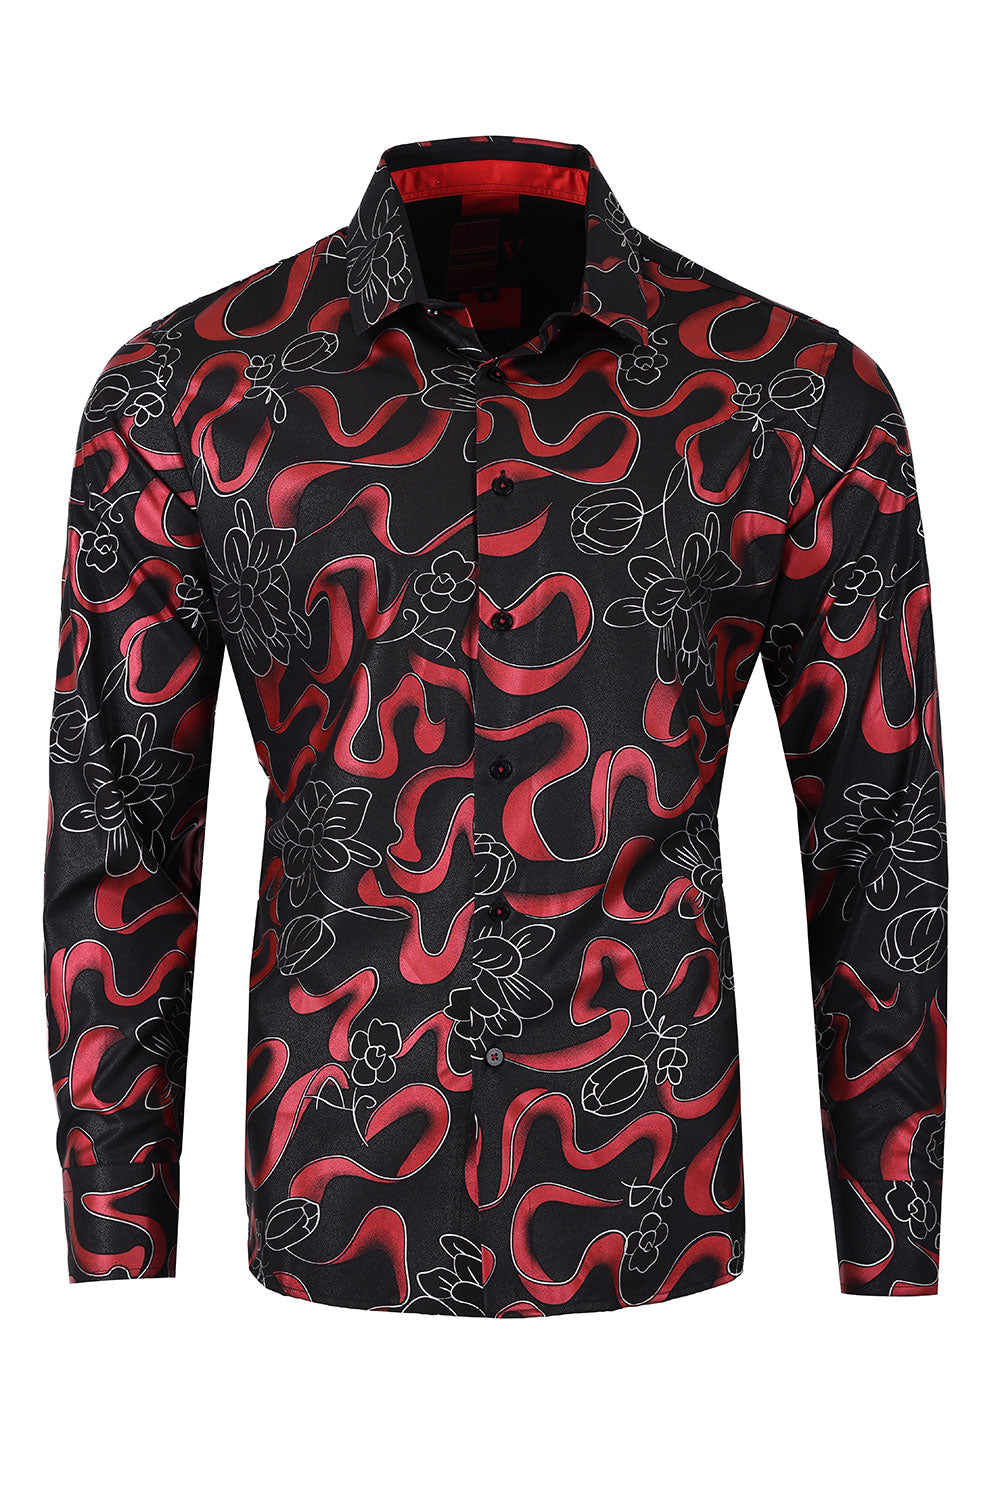 Vassari Mens Floral Print Design Button Down Luxury Shirt  2VS154 Black and Red